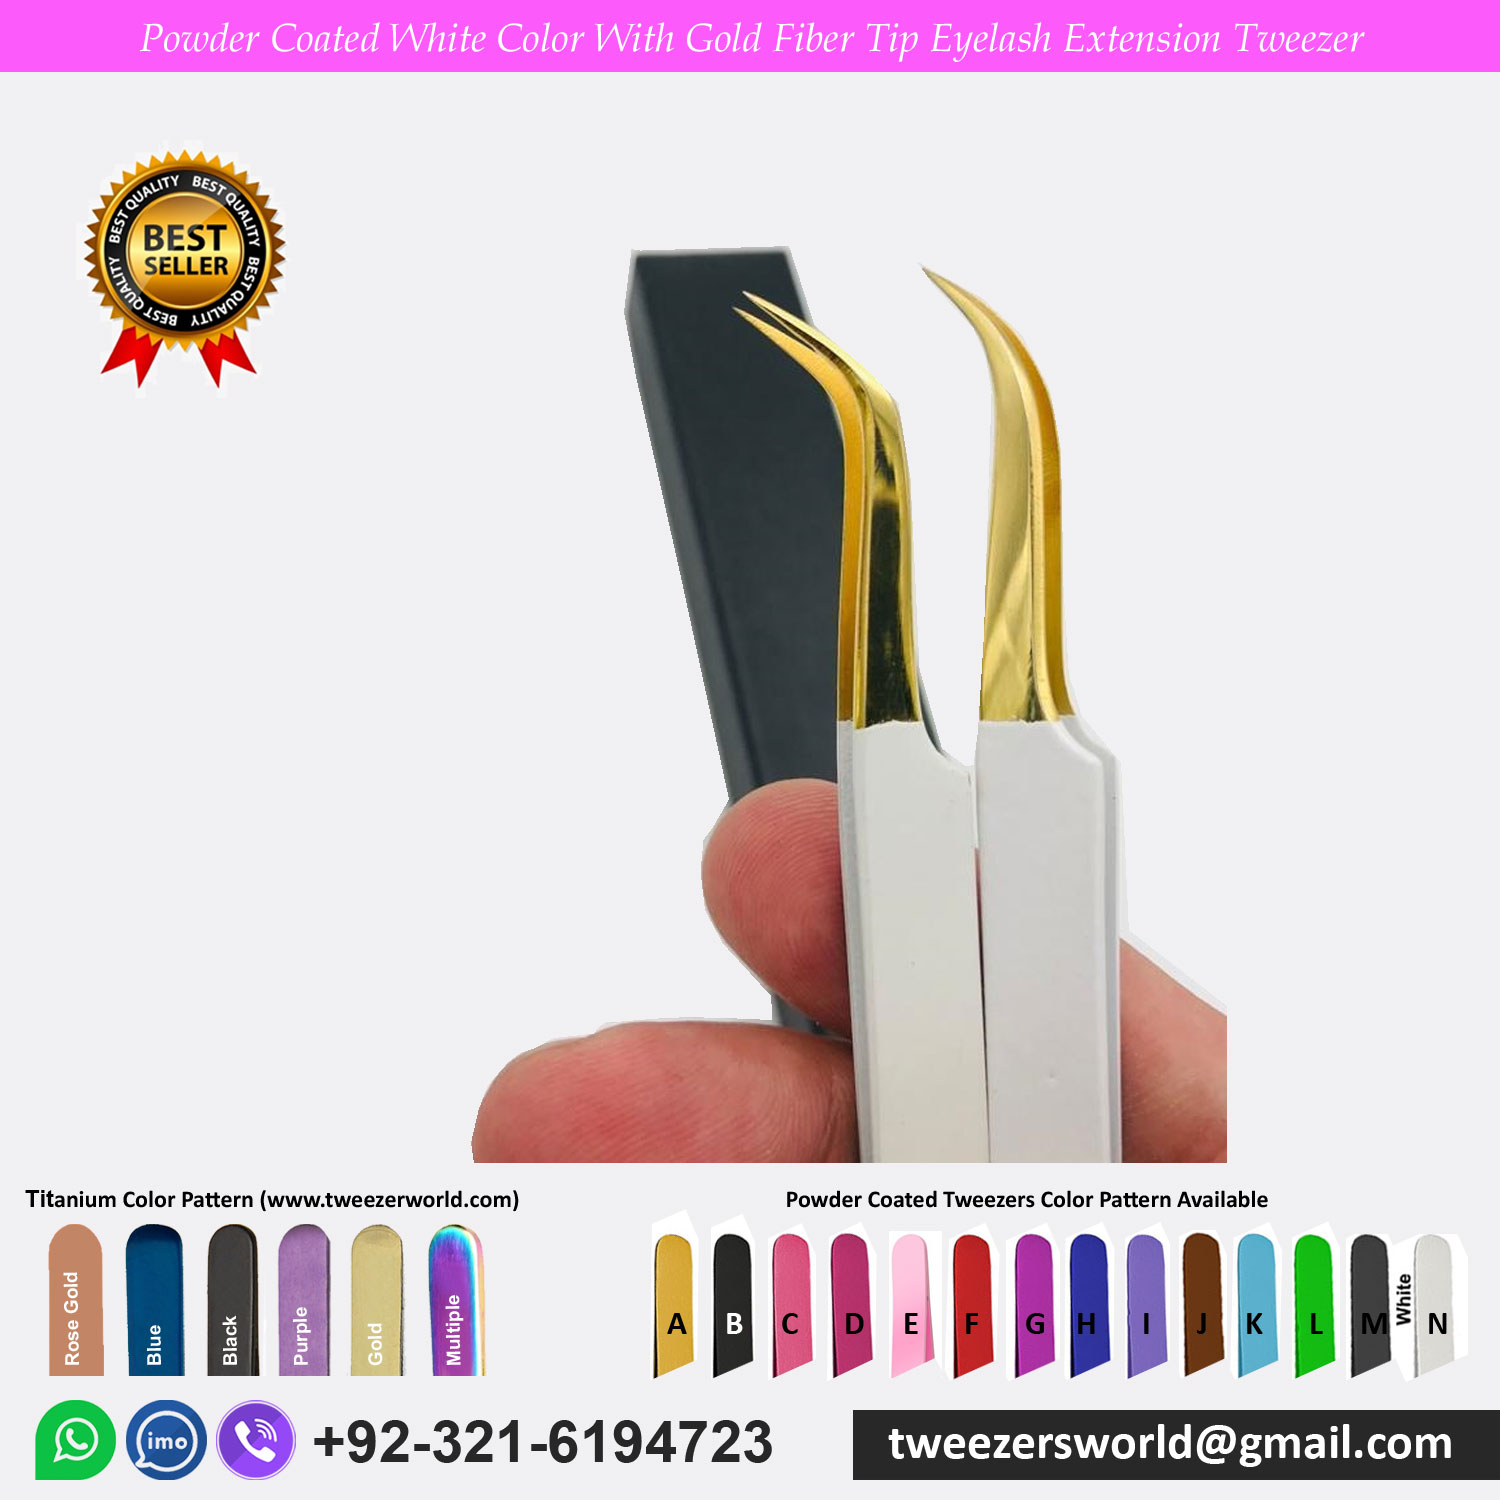 Powder Coated White Color With Gold Fiber Tip Eyelash Extension Tweezer                                                                                                  Powder Coated White Color With Gold Fiber Tip Eyelash Extension Tweezer